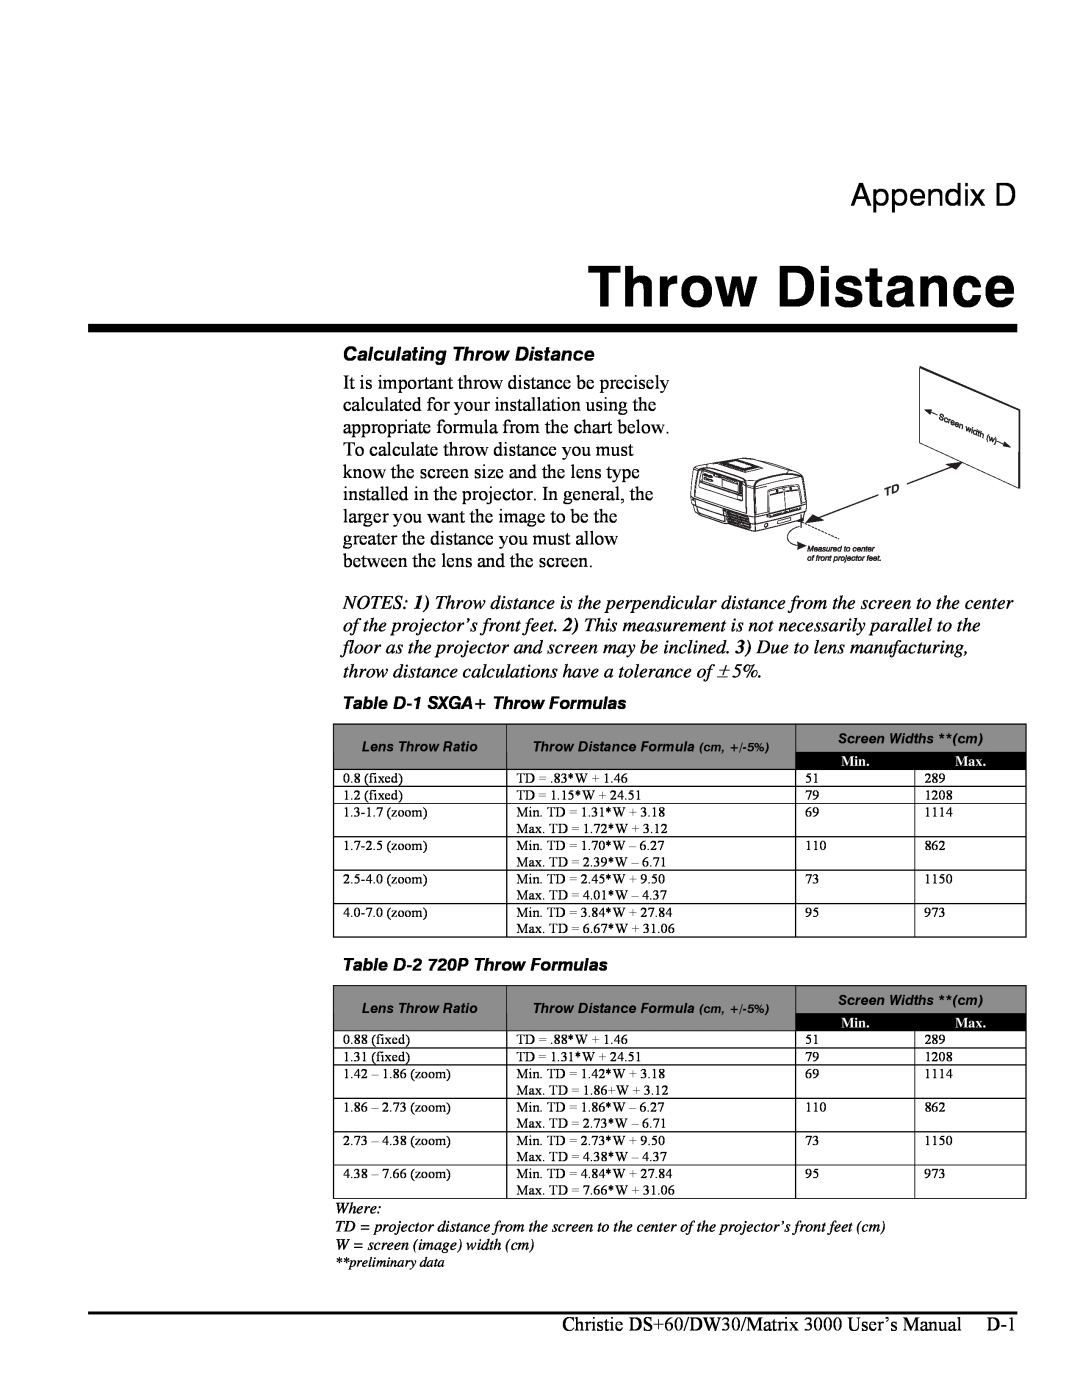 Texas Instruments MATRIX 3000, DW30 Appendix D, Calculating Throw Distance, Table D-1 SXGA+ Throw Formulas, Where 